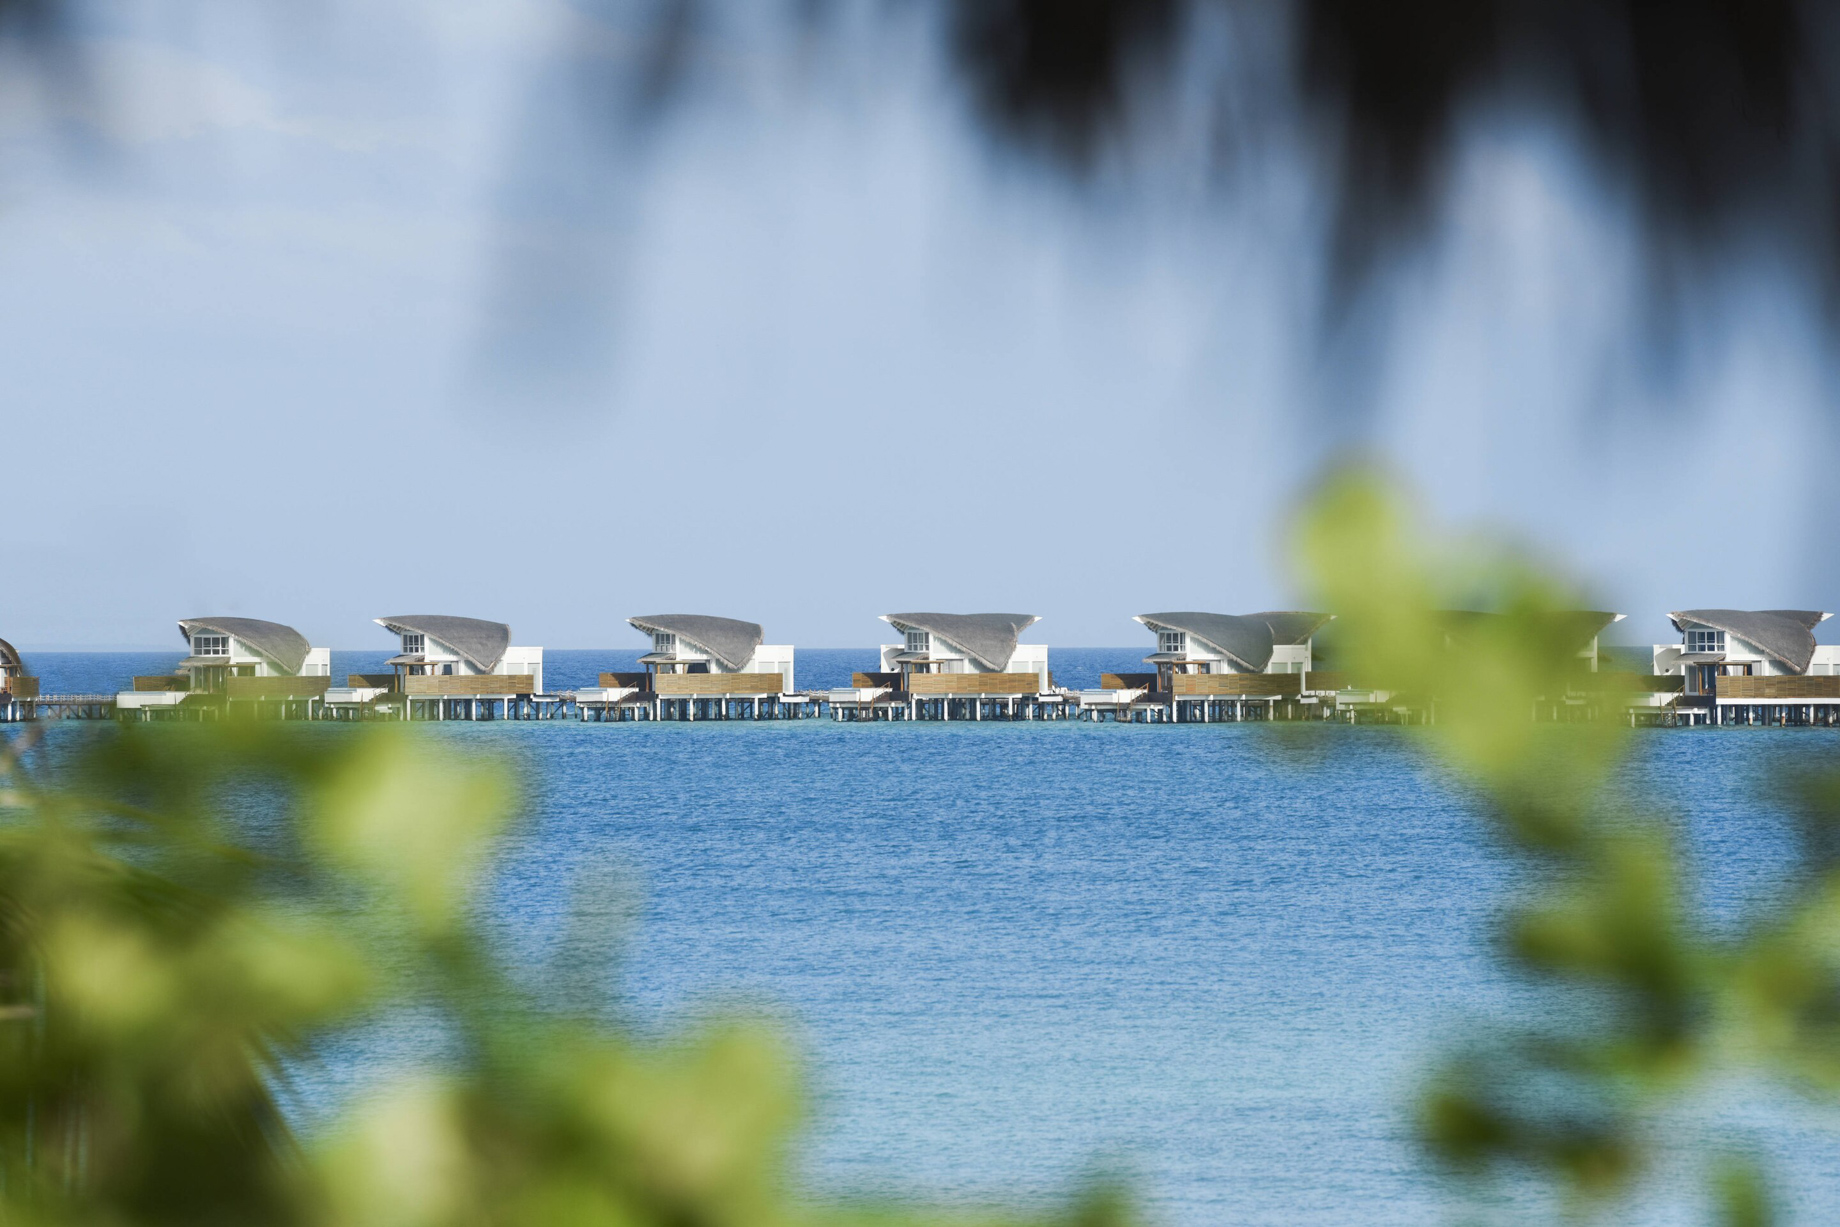 JW Marriott Maldives Resort & Spa – Shaviyani Atoll, Maldives – Overwater Villas